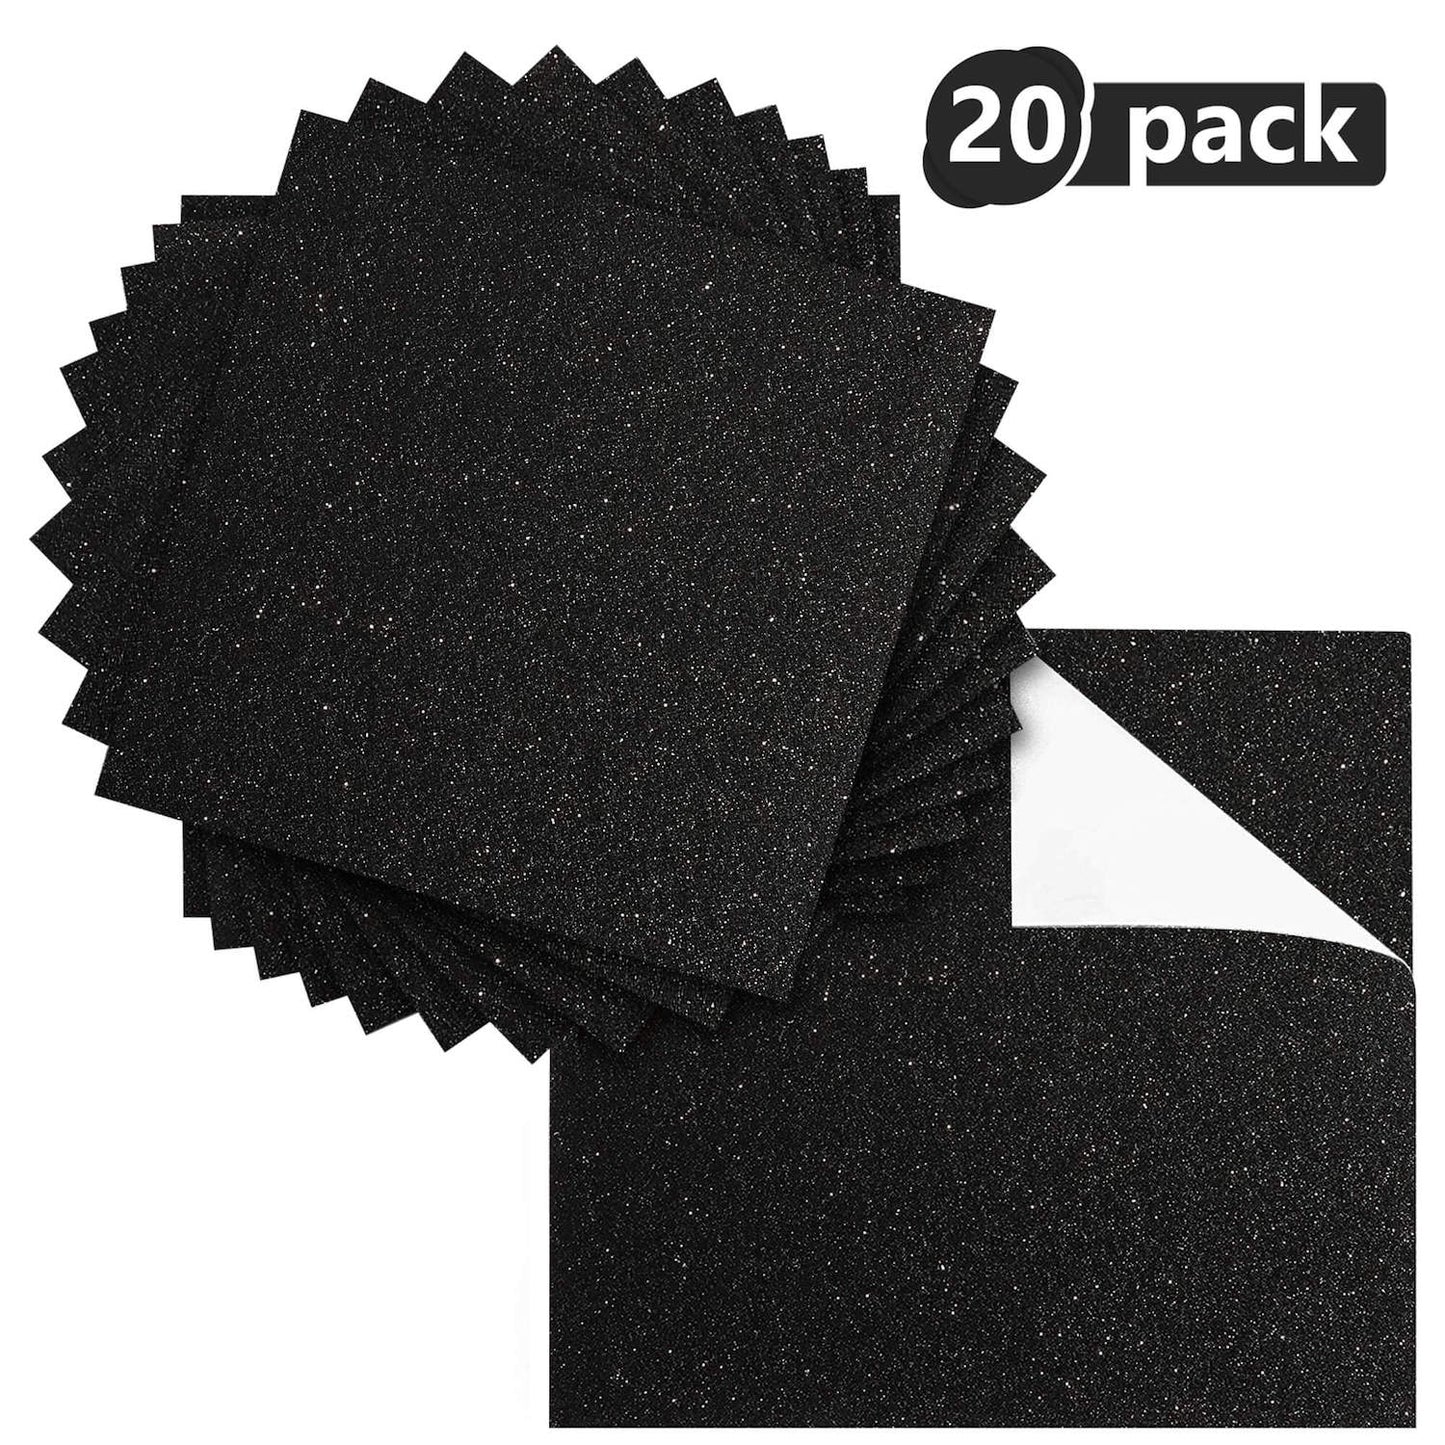 20 Pack - Black 12x12